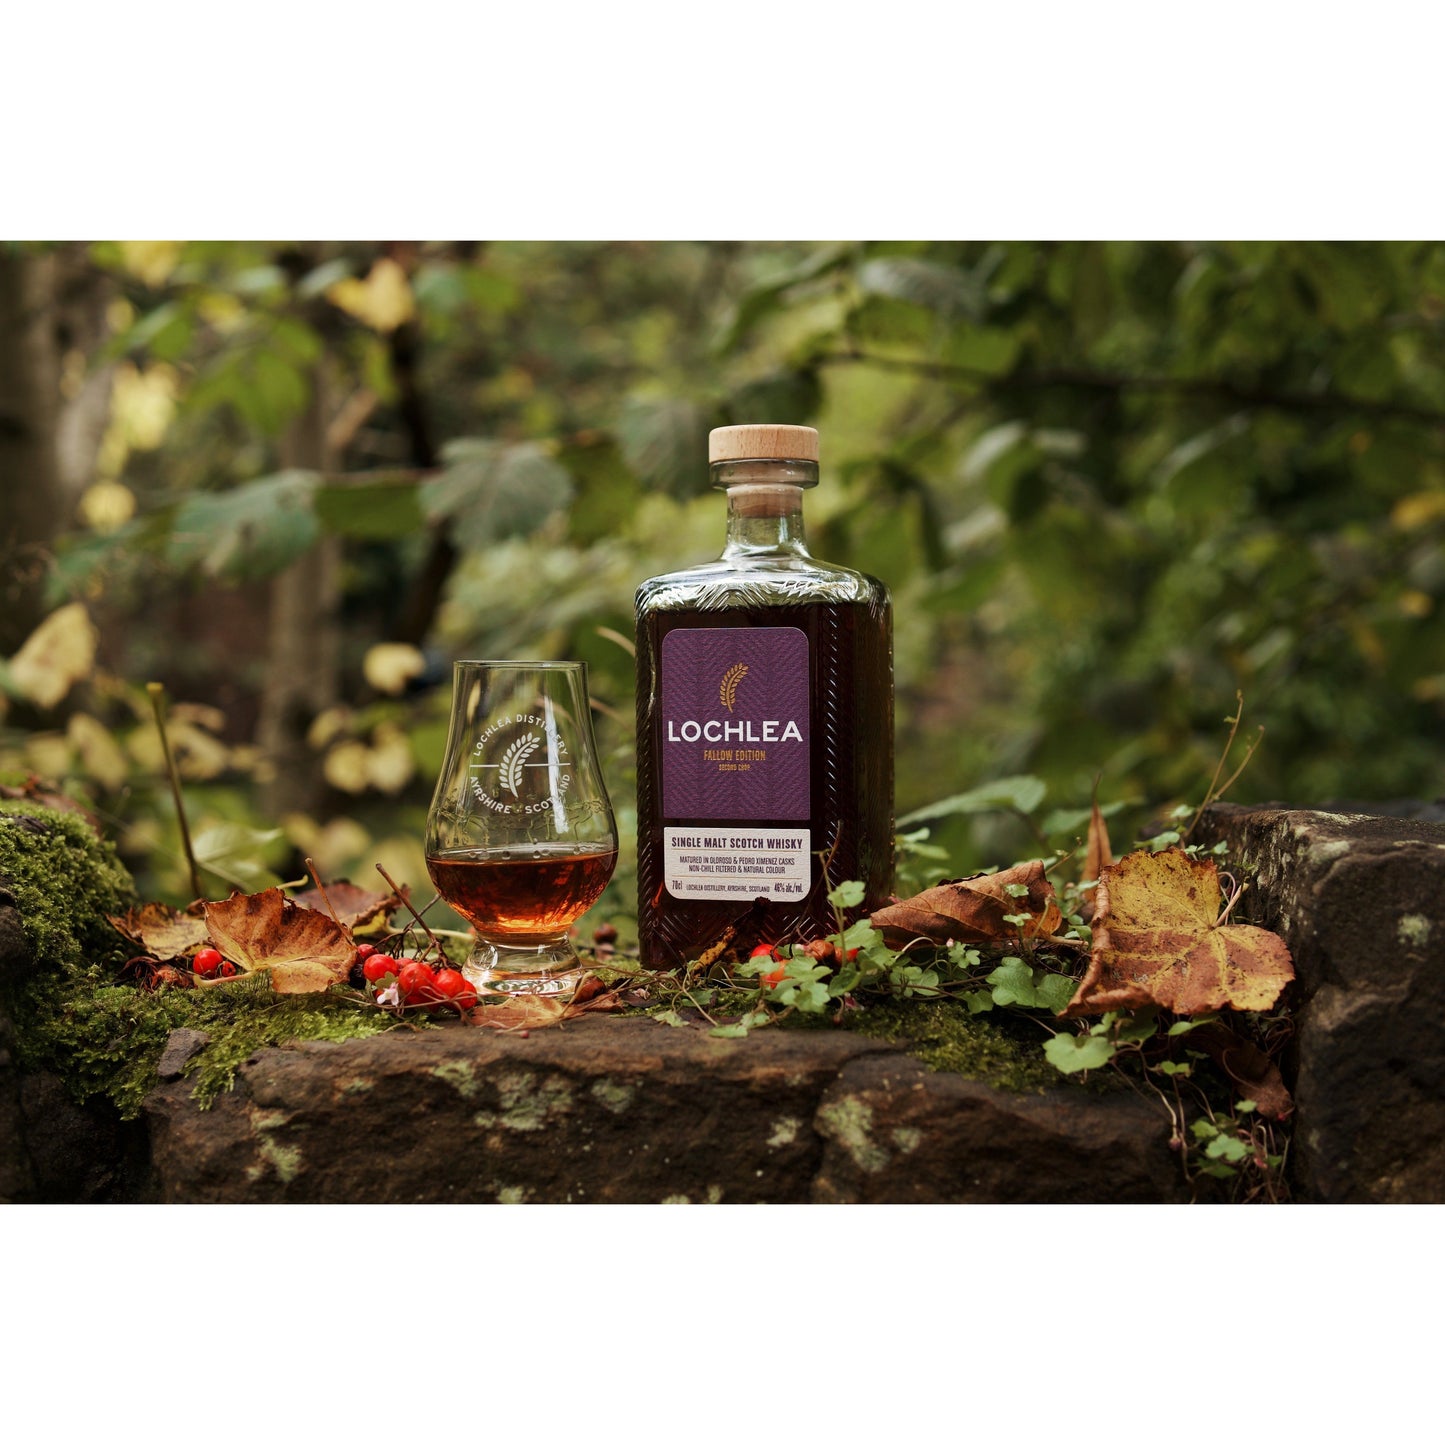 Lochlea Fallow Edition (Second Crop) - Single Malt Scotch Whisky-Single Malt Scotch Whisky-5065008253174-Fountainhall Wines